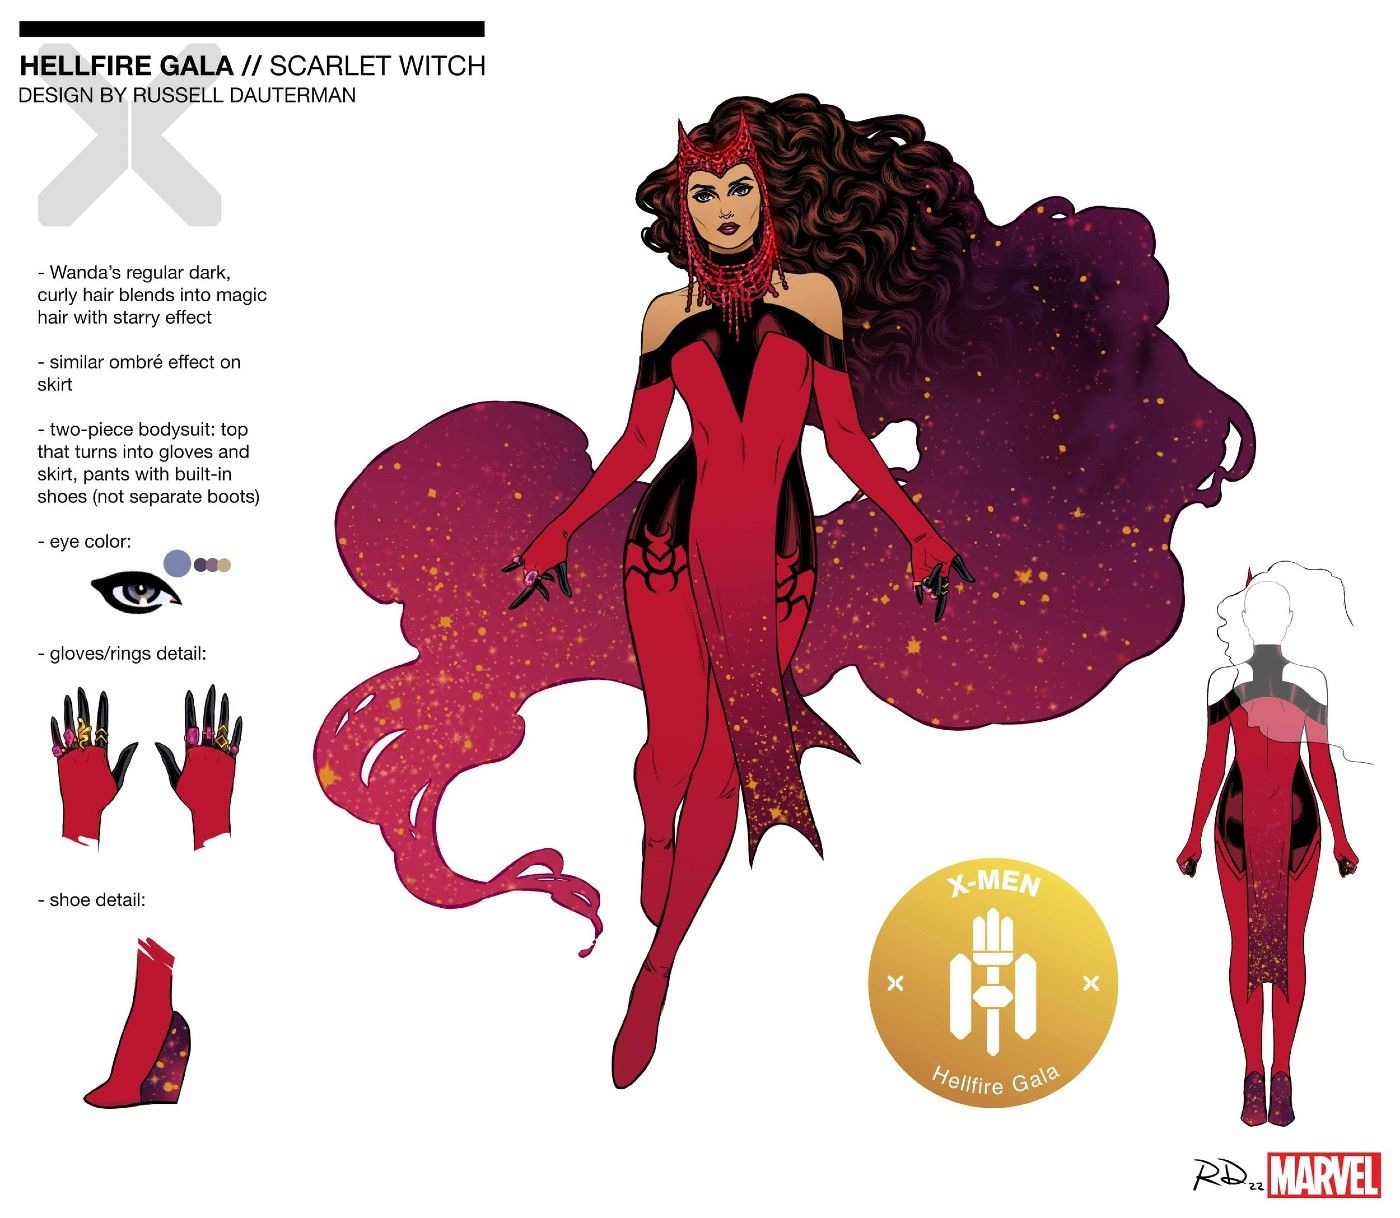 Hellfire Gala 2022 Russell Dauterman Scarlet Witch Wanda